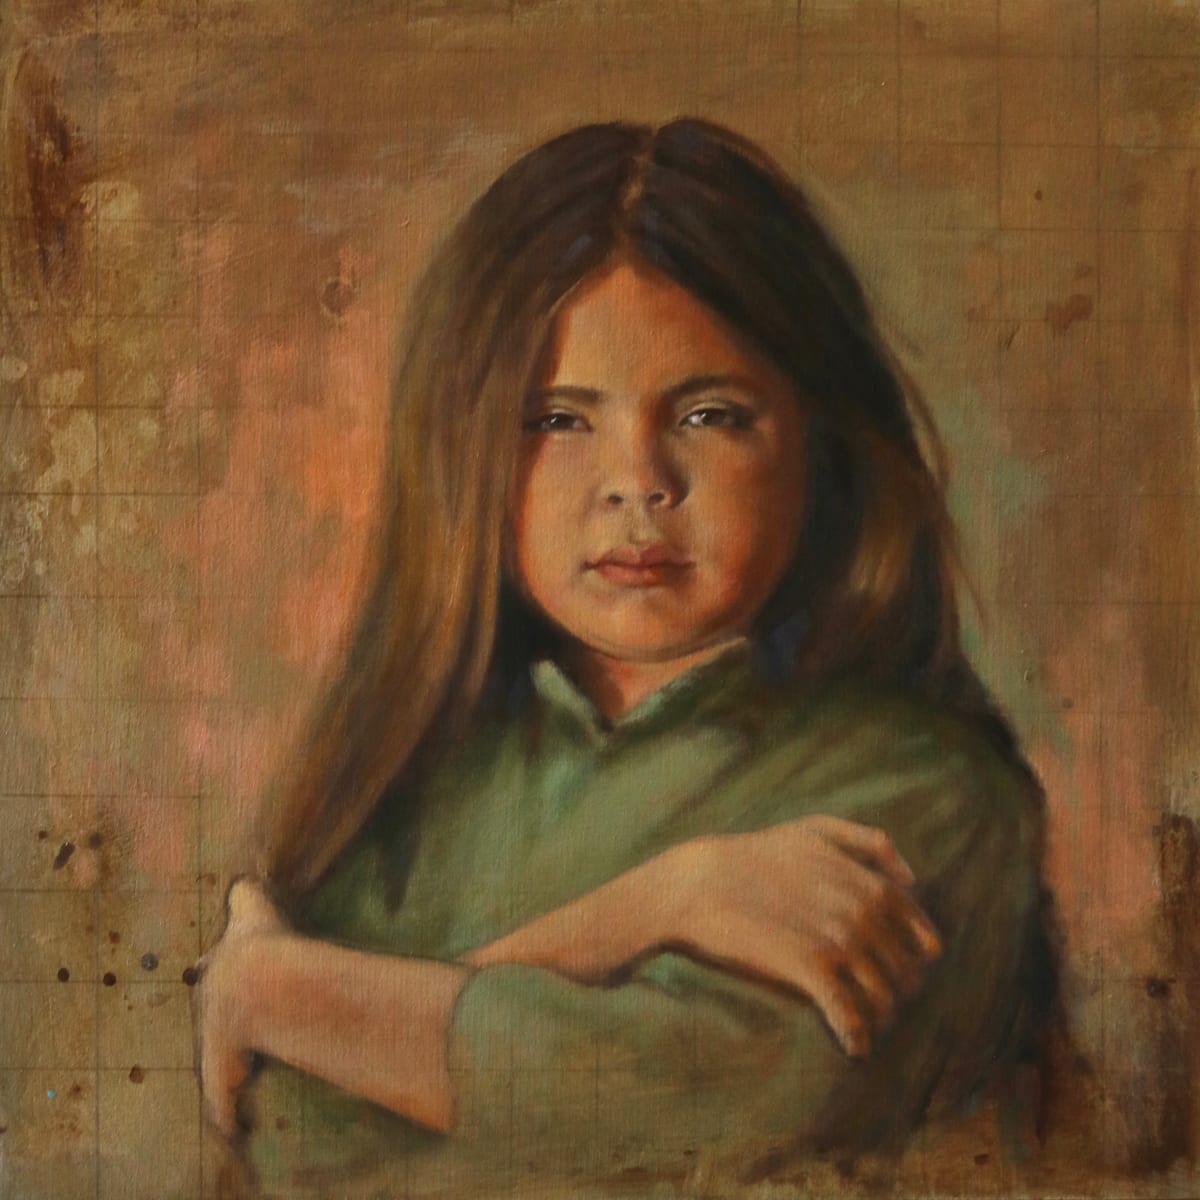 Fierce by Karen Clarkson  Image: Portrait of Drew, beautiful young Navajo/Creek girl